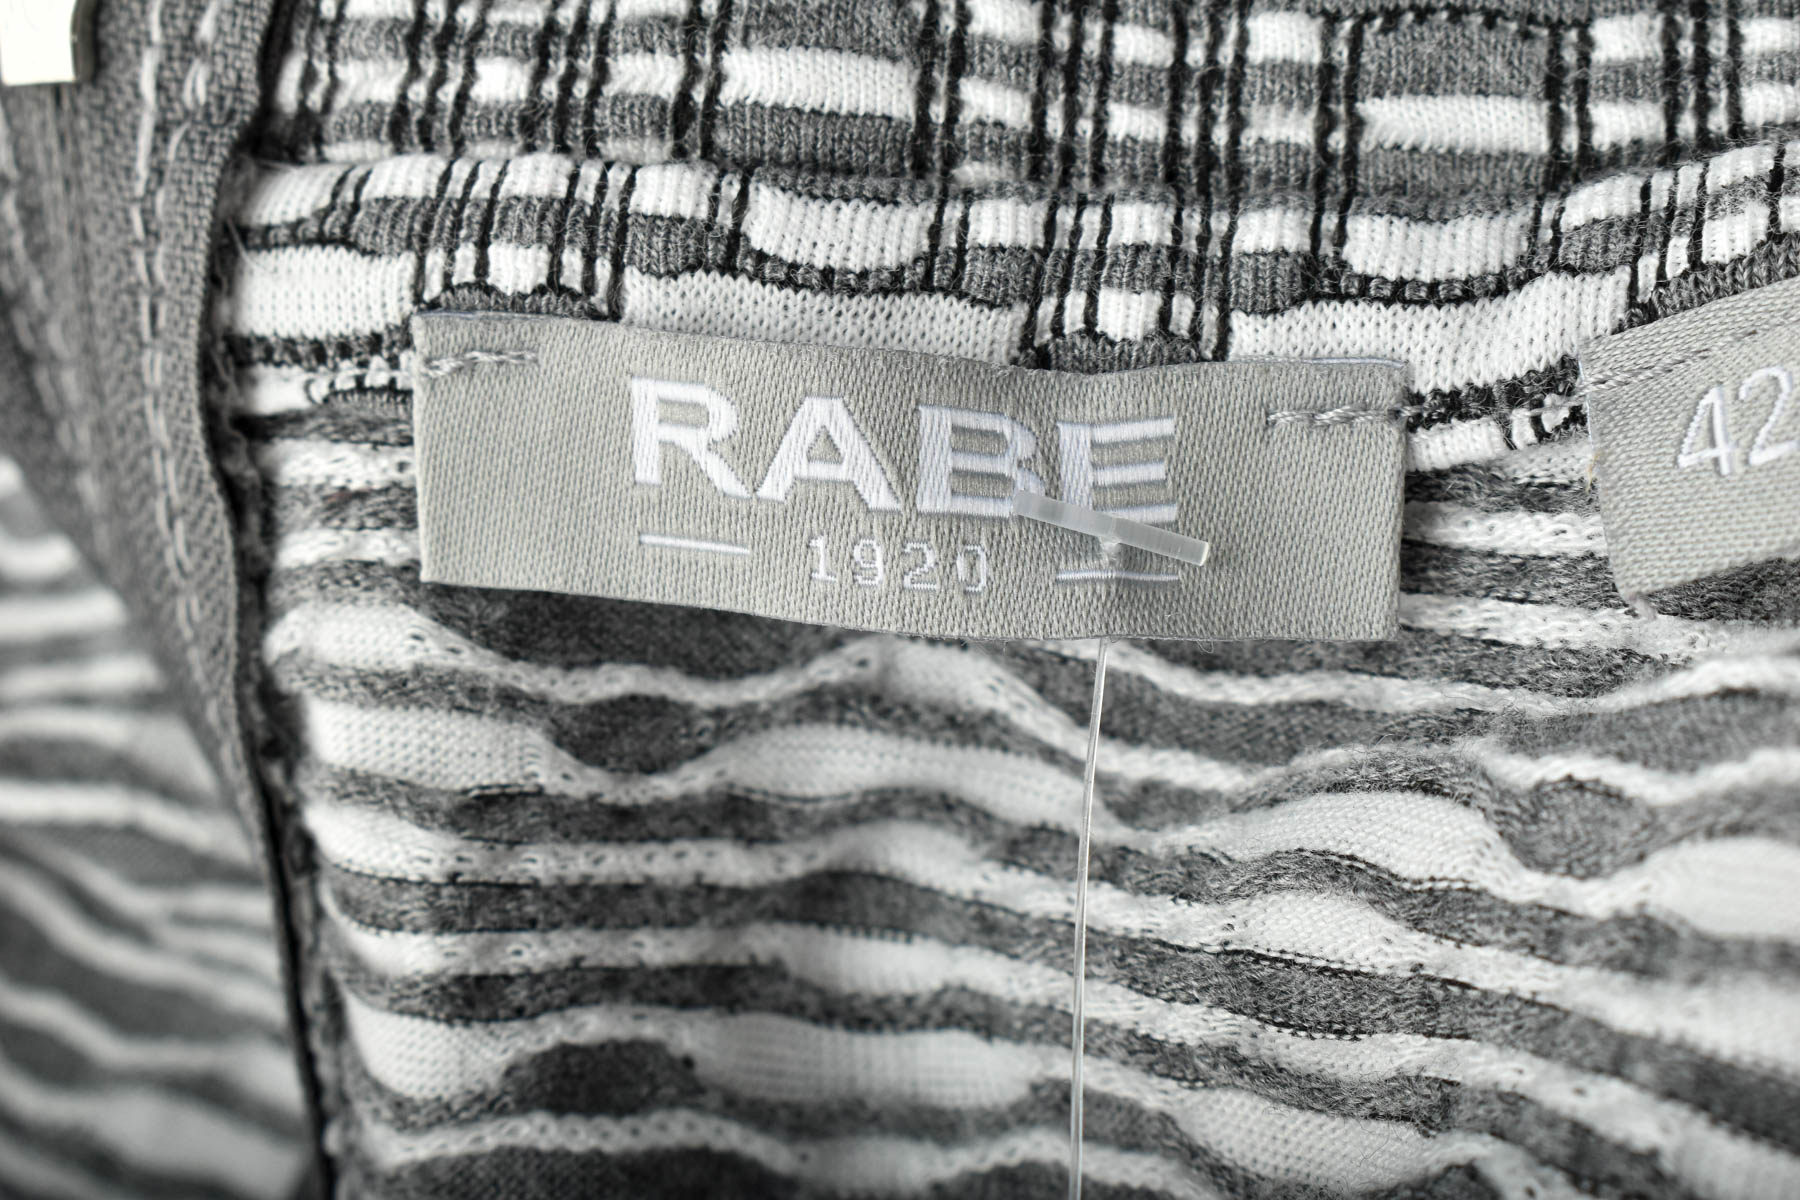 Дамски пуловер - Rabe - 2